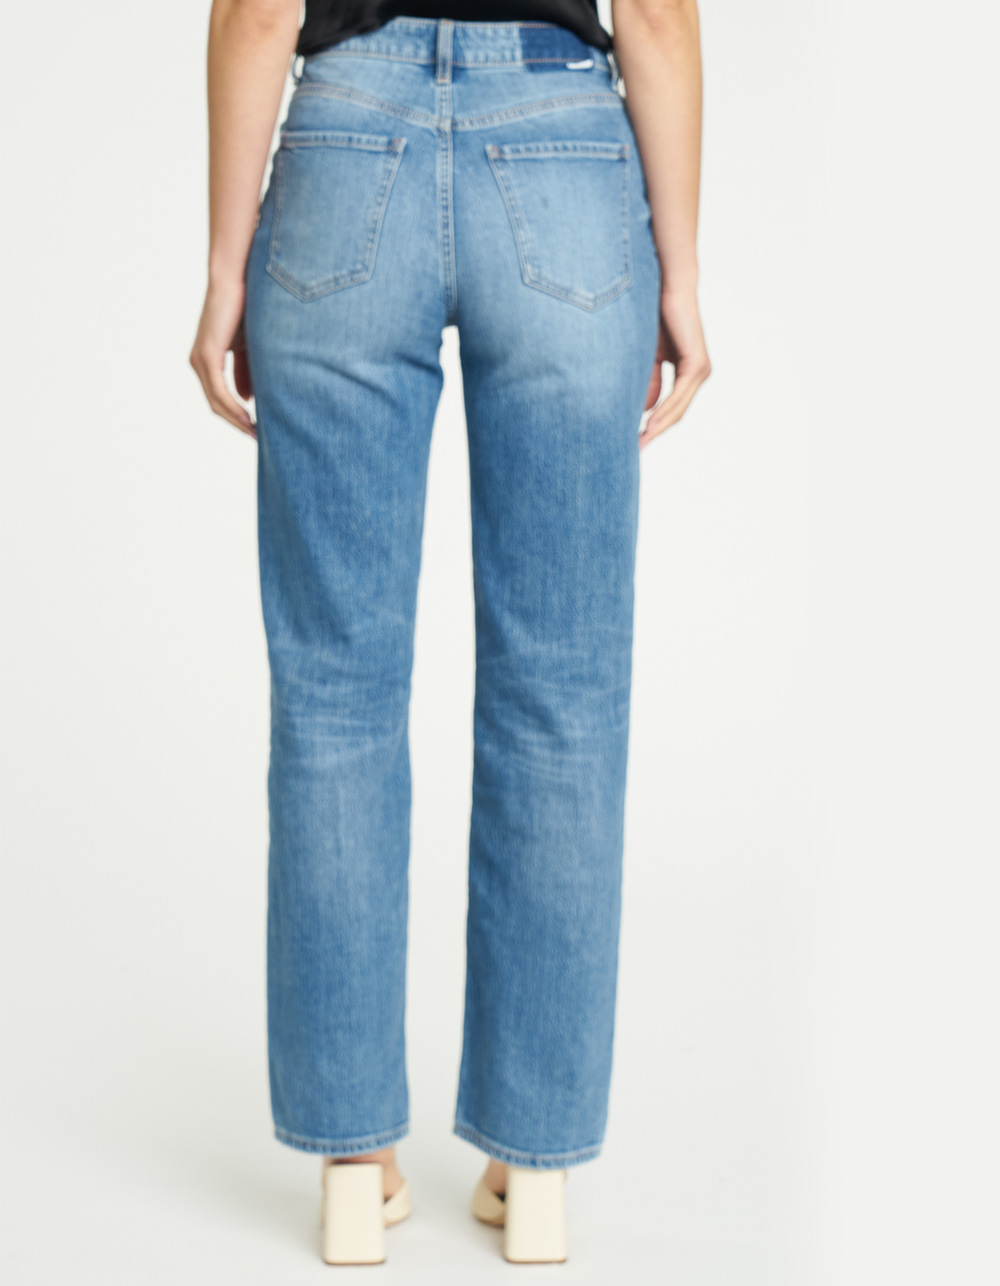 DAZE Sundaze Crossover Womens Jeans - MEDIUM WASH | Tillys